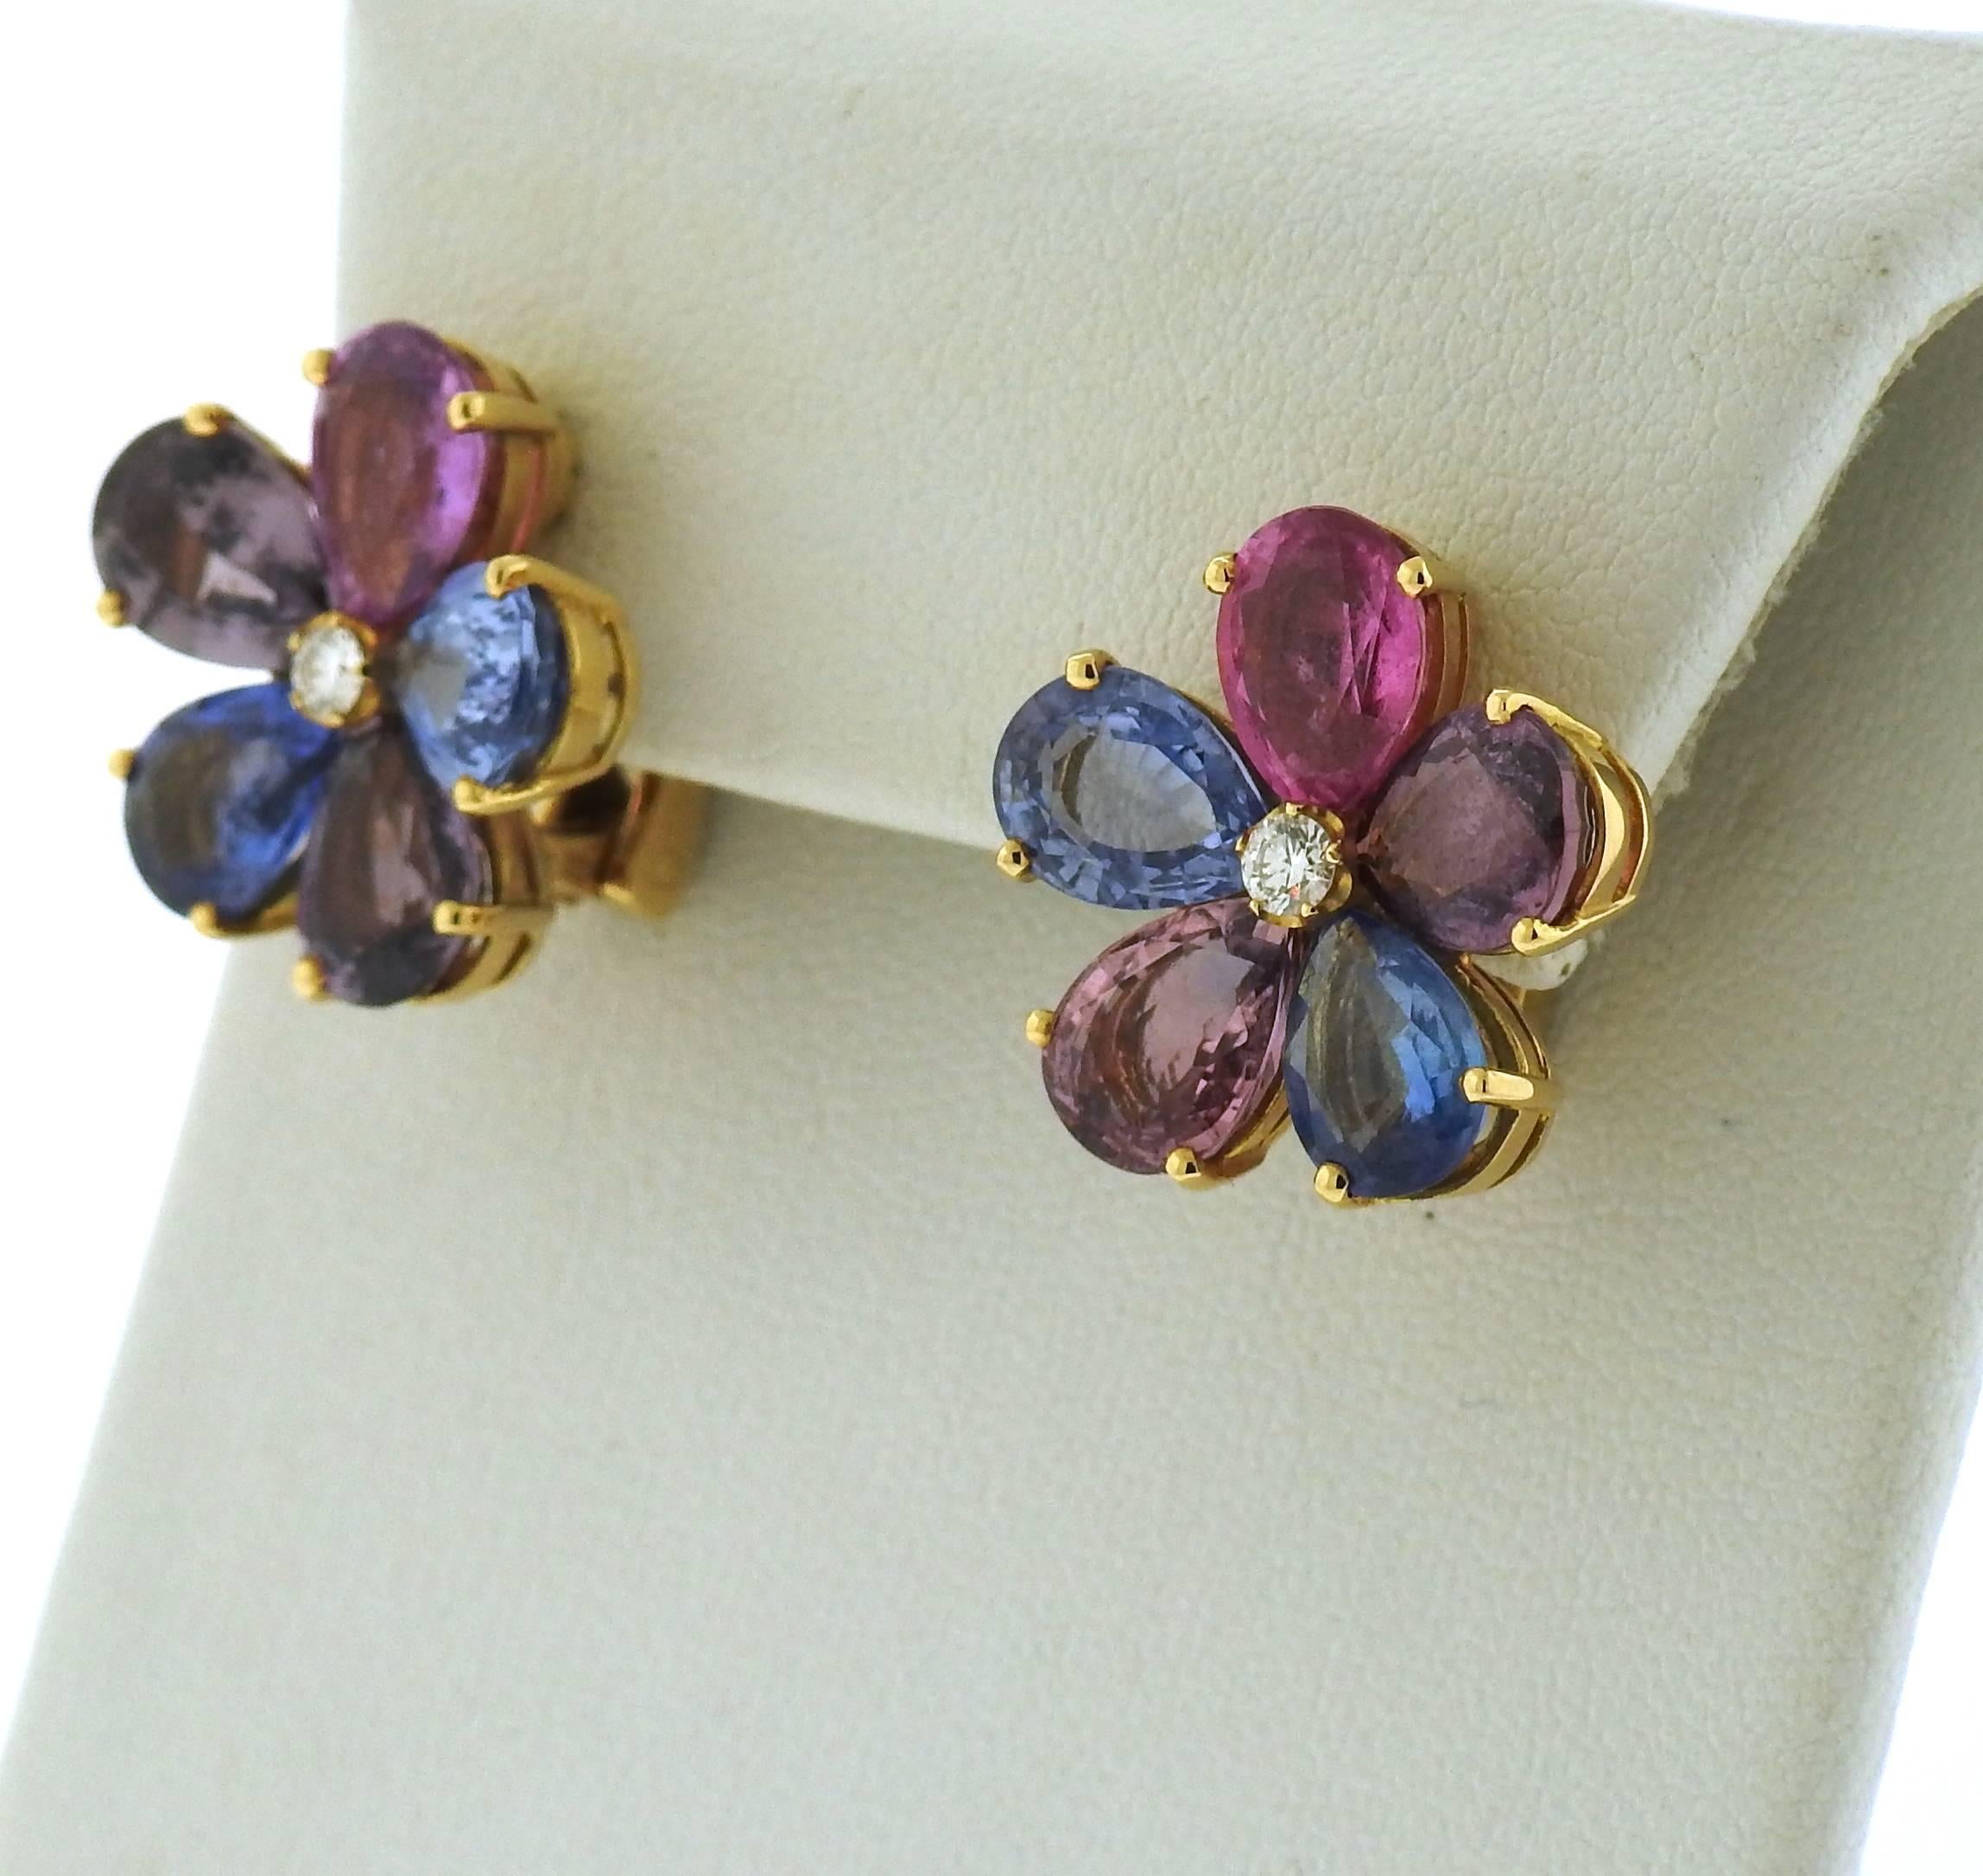 bvlgari flower earrings